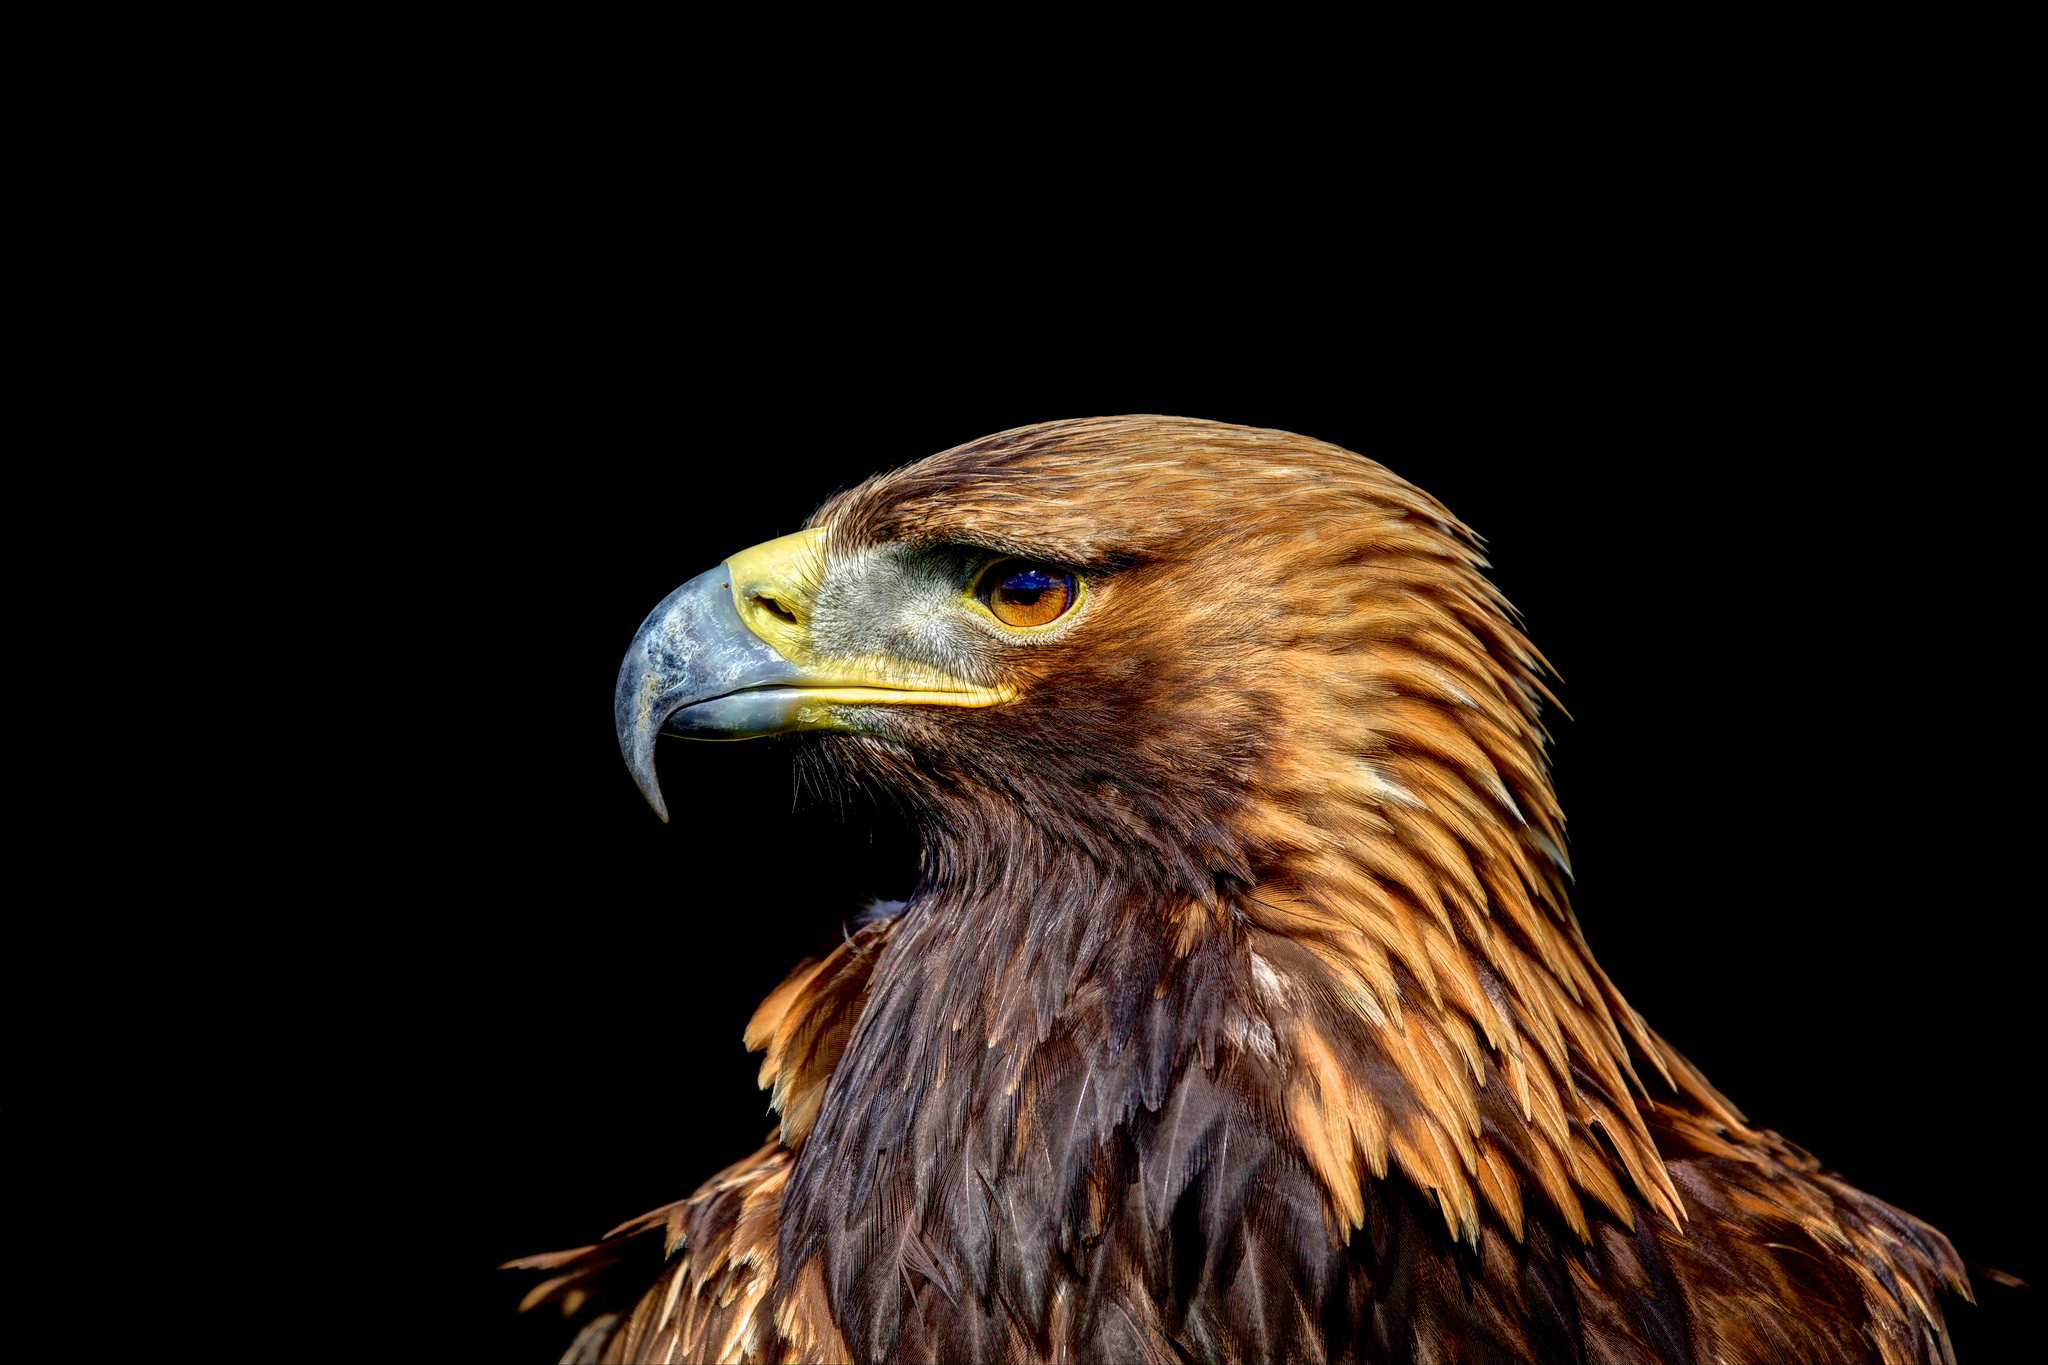 403877 descargar imagen águila real, perfil, animales, pico, ave de rapiña, ave, aves: fondos de pantalla y protectores de pantalla gratis